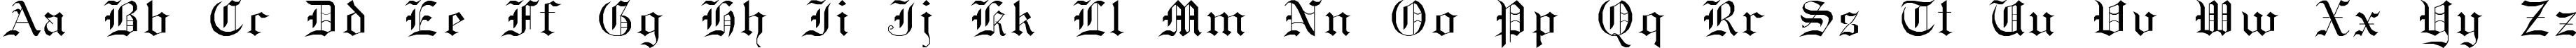 Пример написания английского алфавита шрифтом GothicE